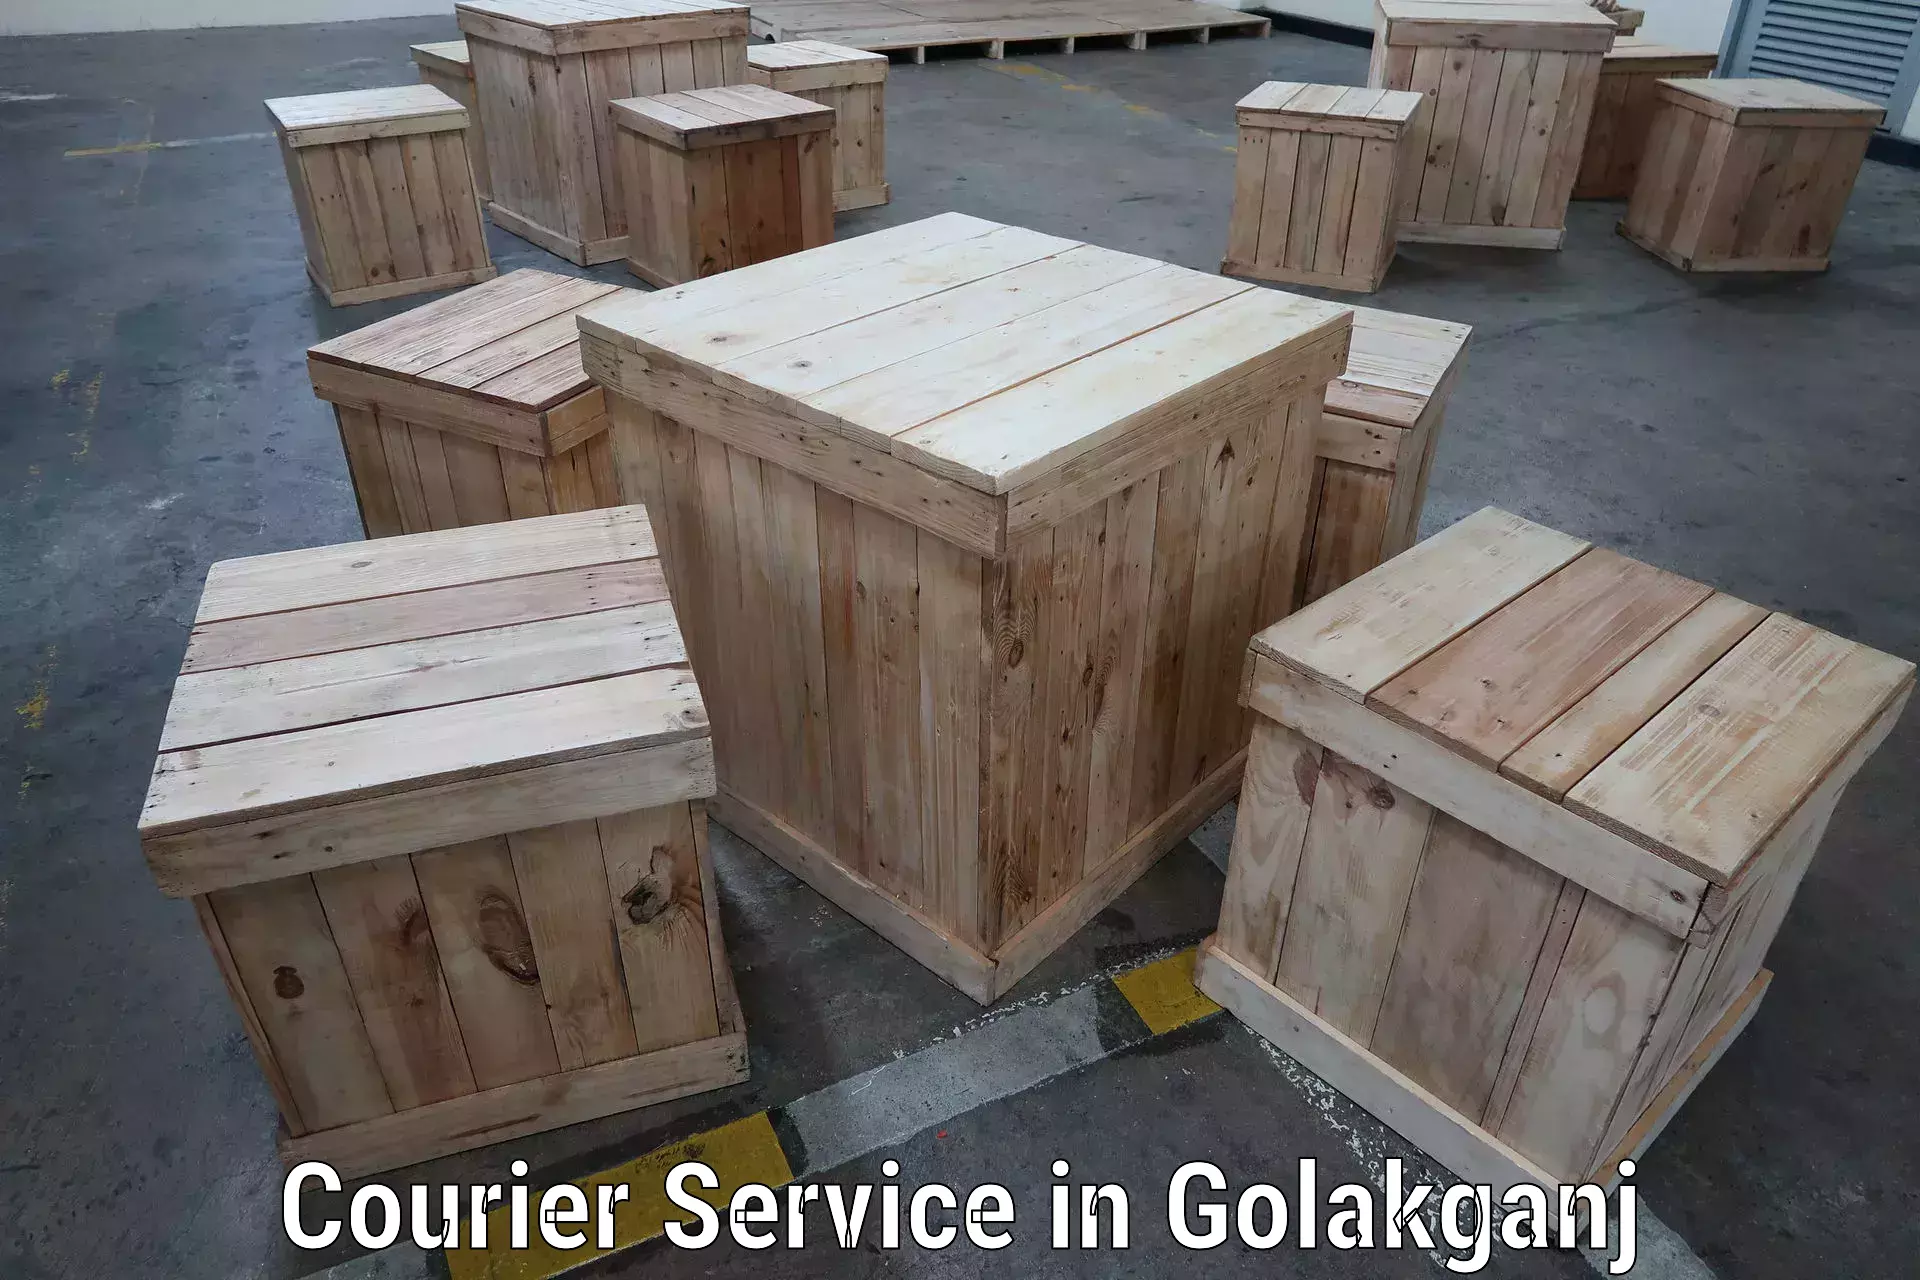 Personal parcel delivery in Golakganj